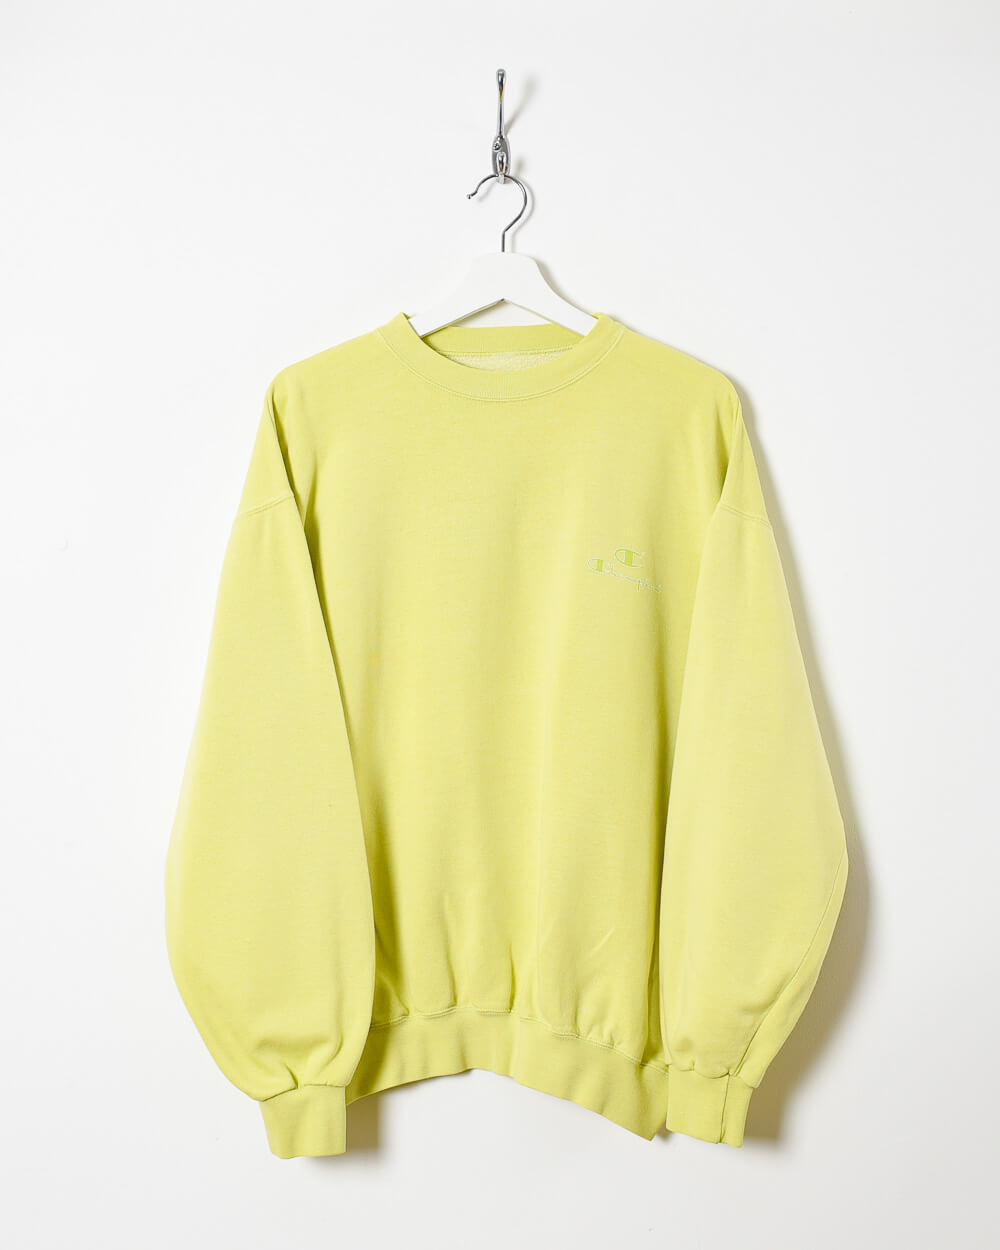 Green Champion Sweatshirt - Medium